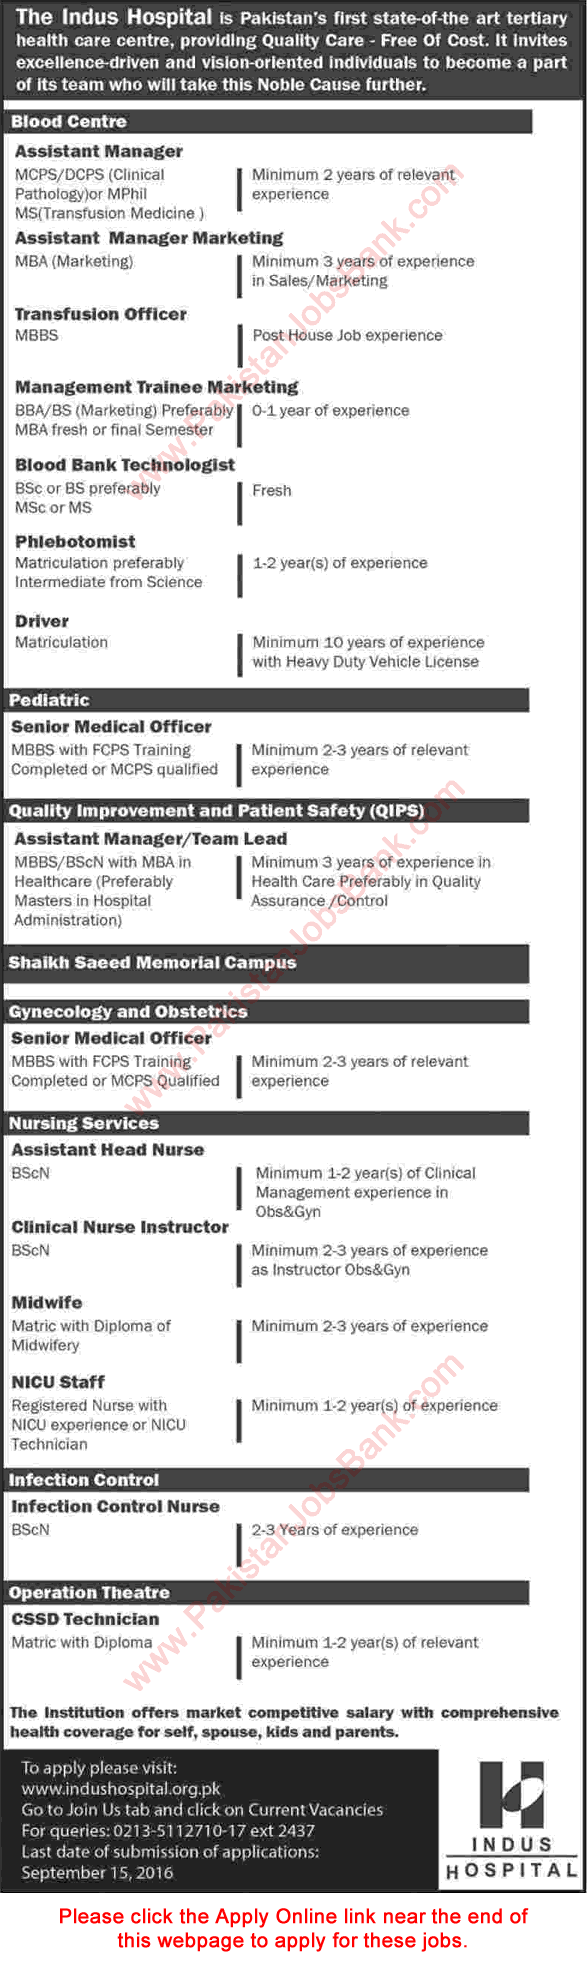 Indus Hospital Karachi Jobs September 2016 Apply Online Medical Officers, Technicians, Nurses & Others Latest